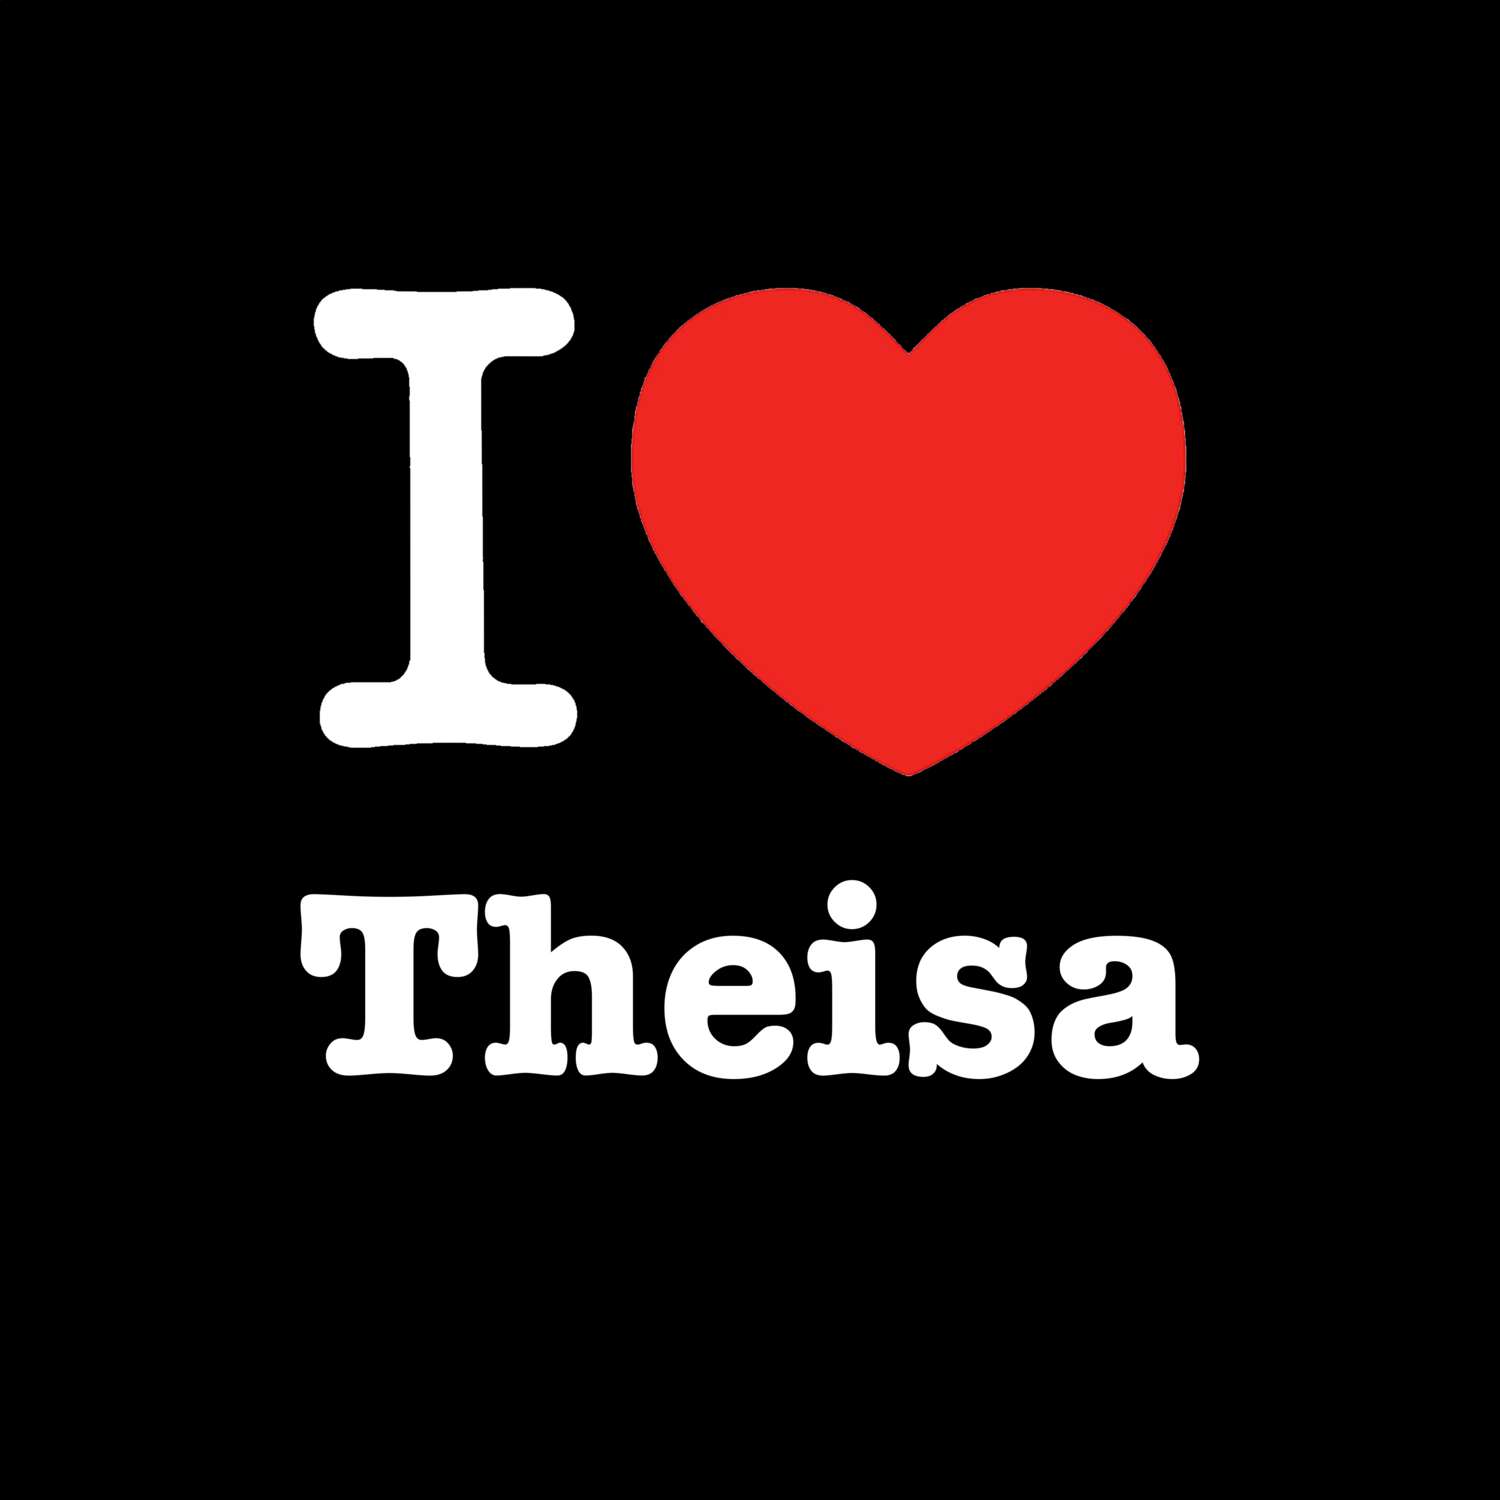 Theisa T-Shirt »I love«